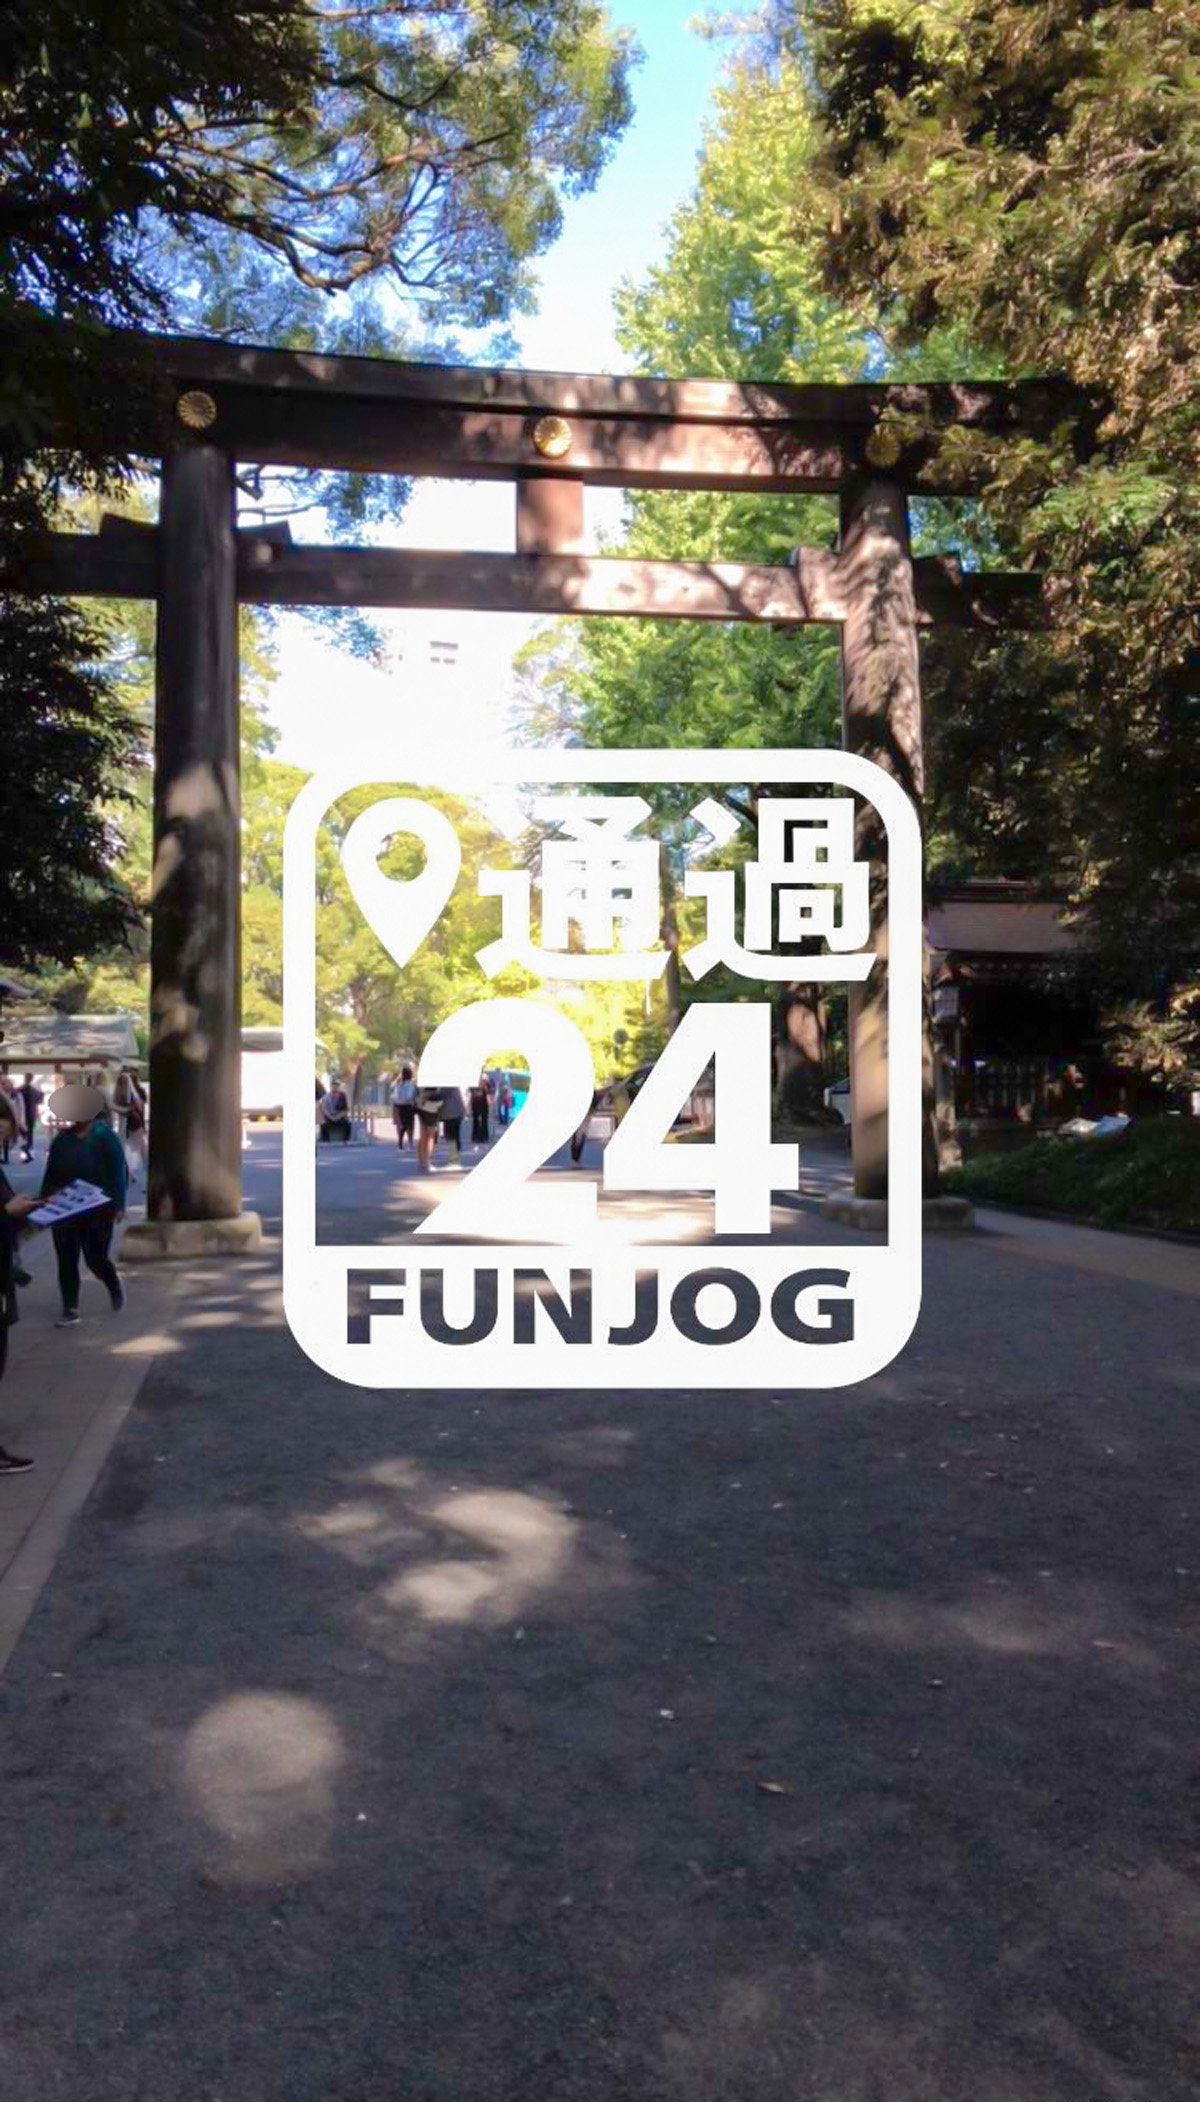 「AR×まちめぐりFUNJOG in 渋谷」の6ヵ所目のチェックポイント北参道入口の鳥居